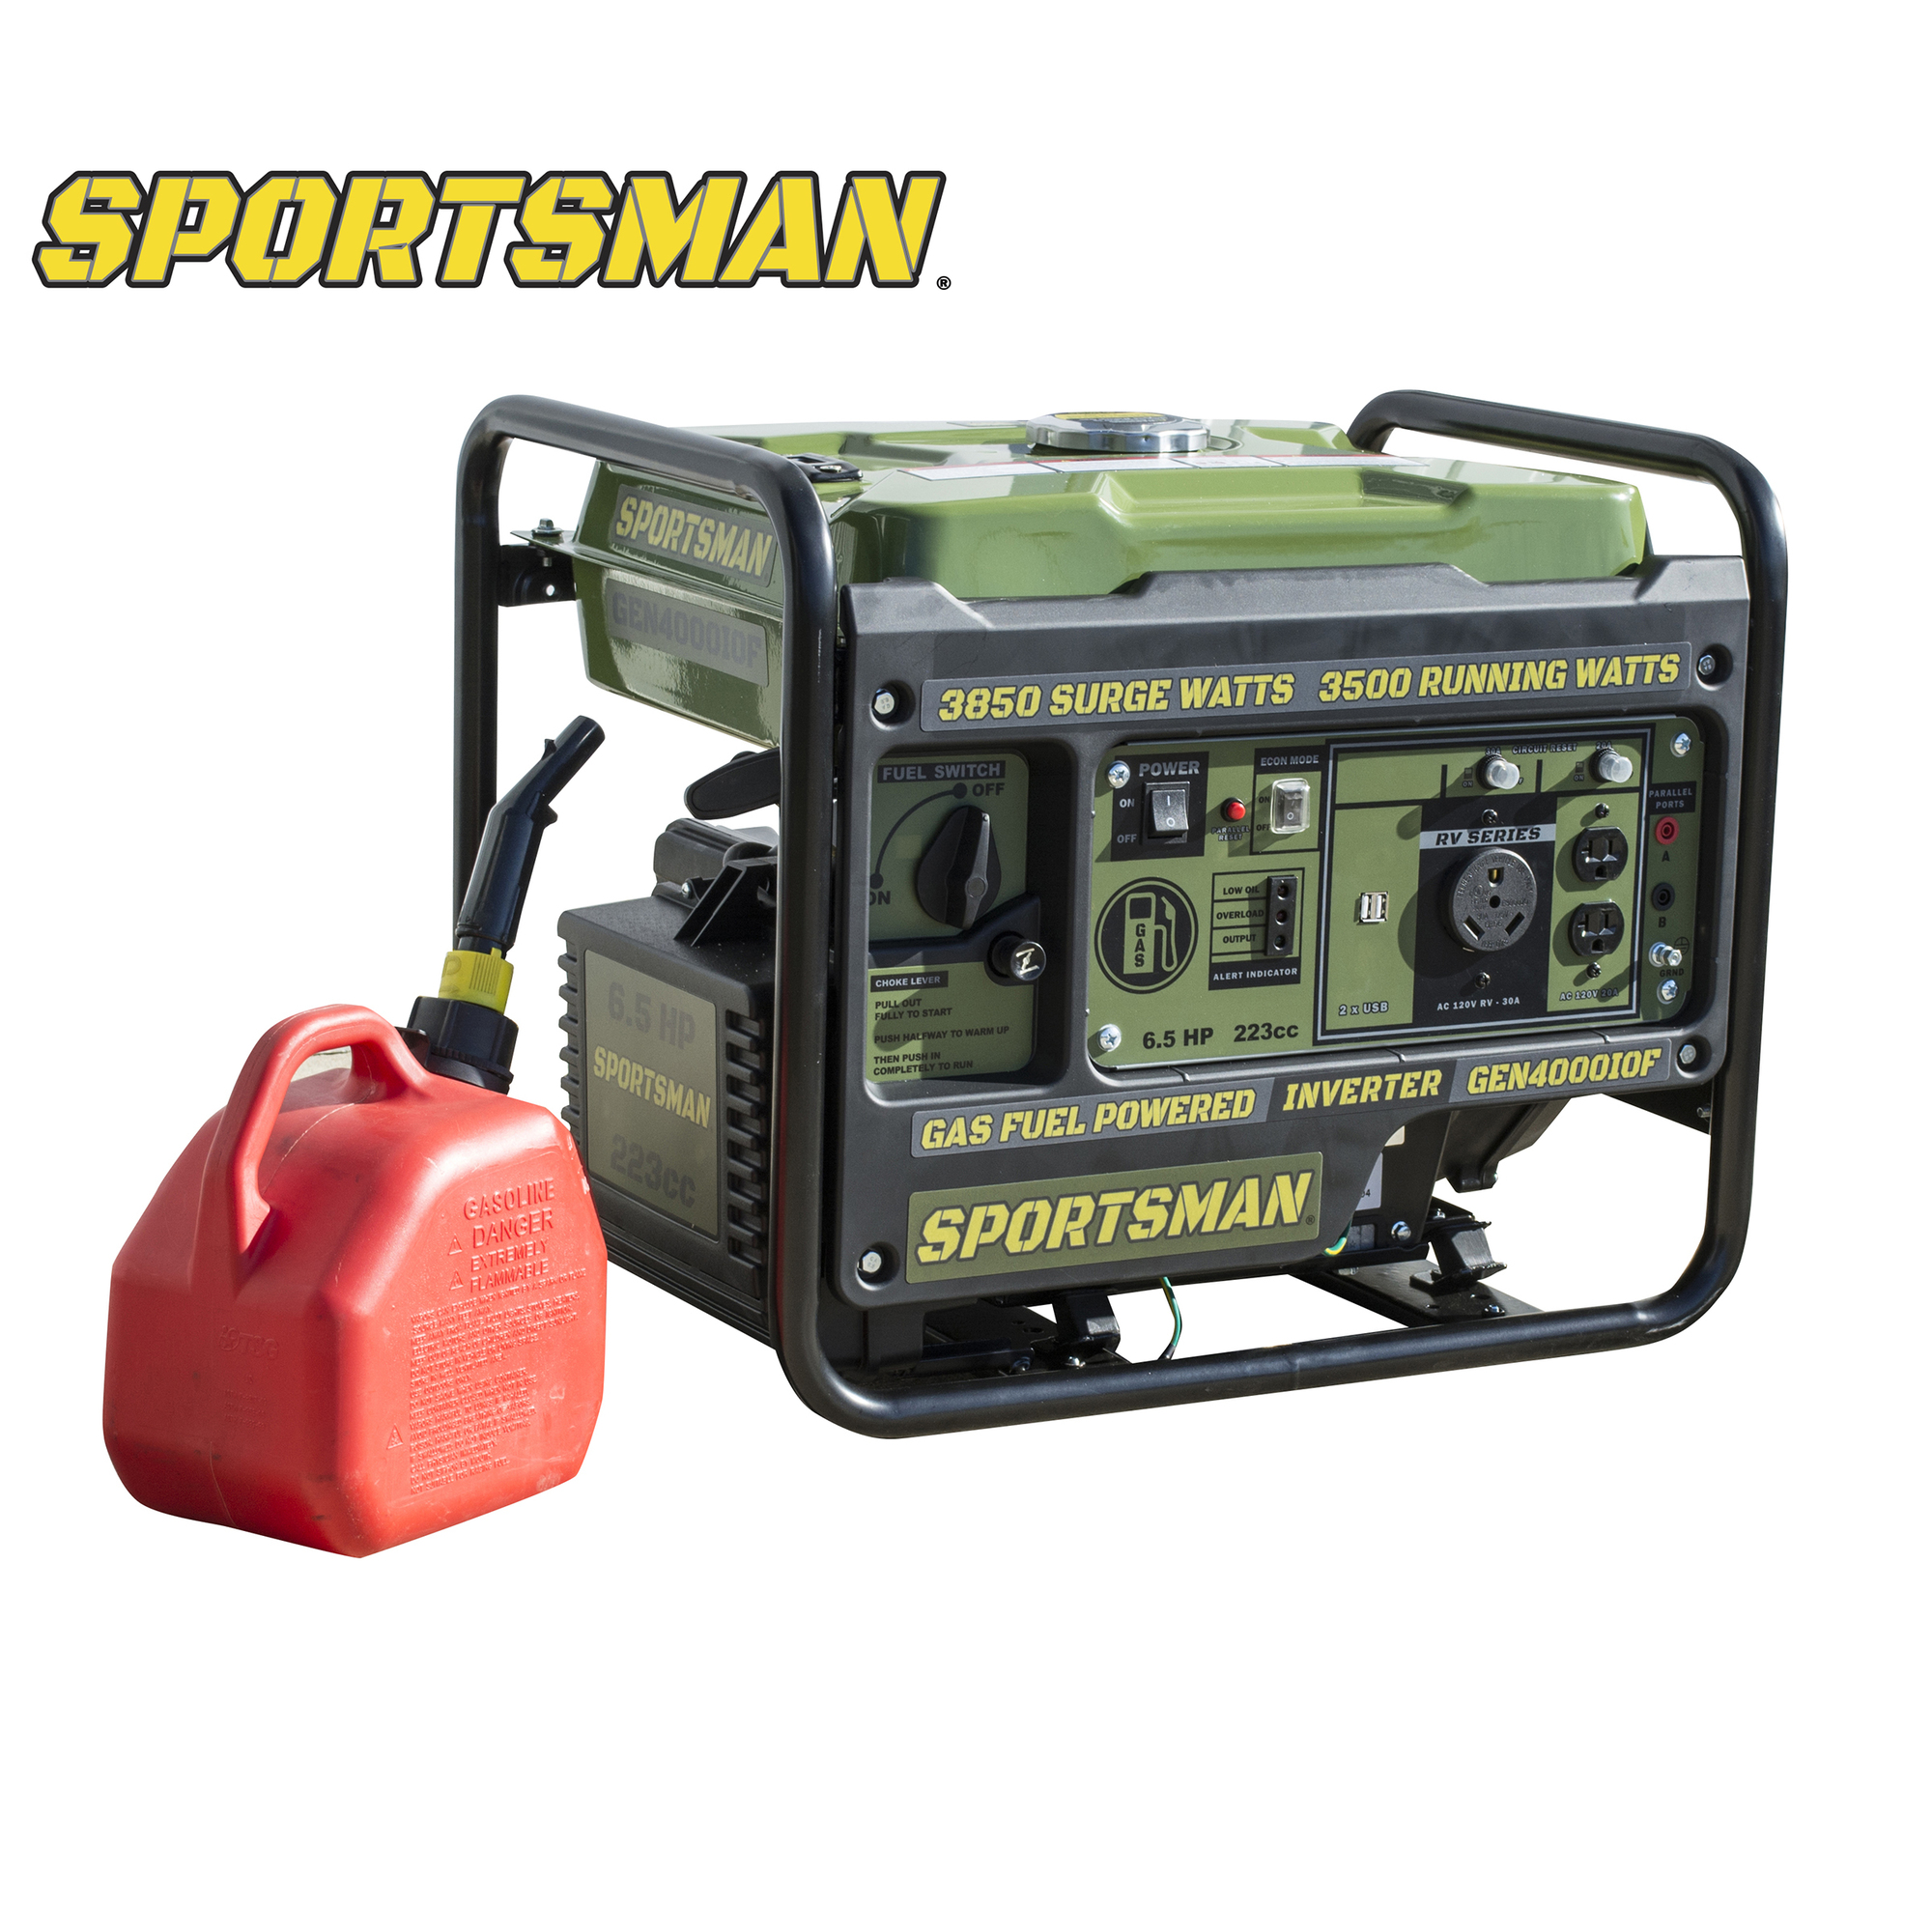 Sportsman, 3850 SW Open Frame Portable Gas Inverter Generator, Surge Watts 3850 Voltage 120 Model GEN4000IOF